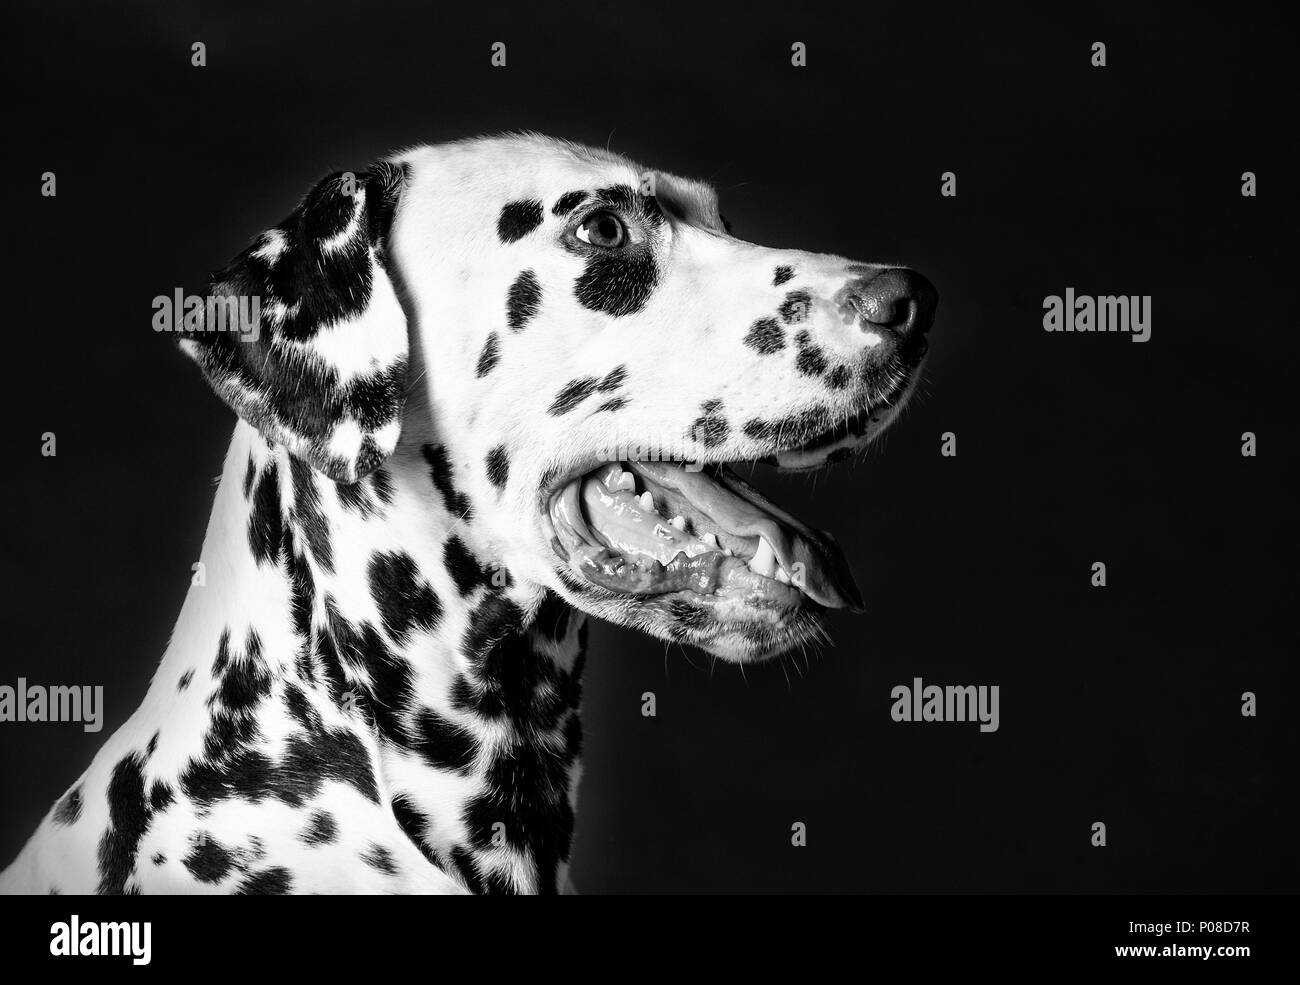 Dalmatian dog in studio with dark background Stock Photo